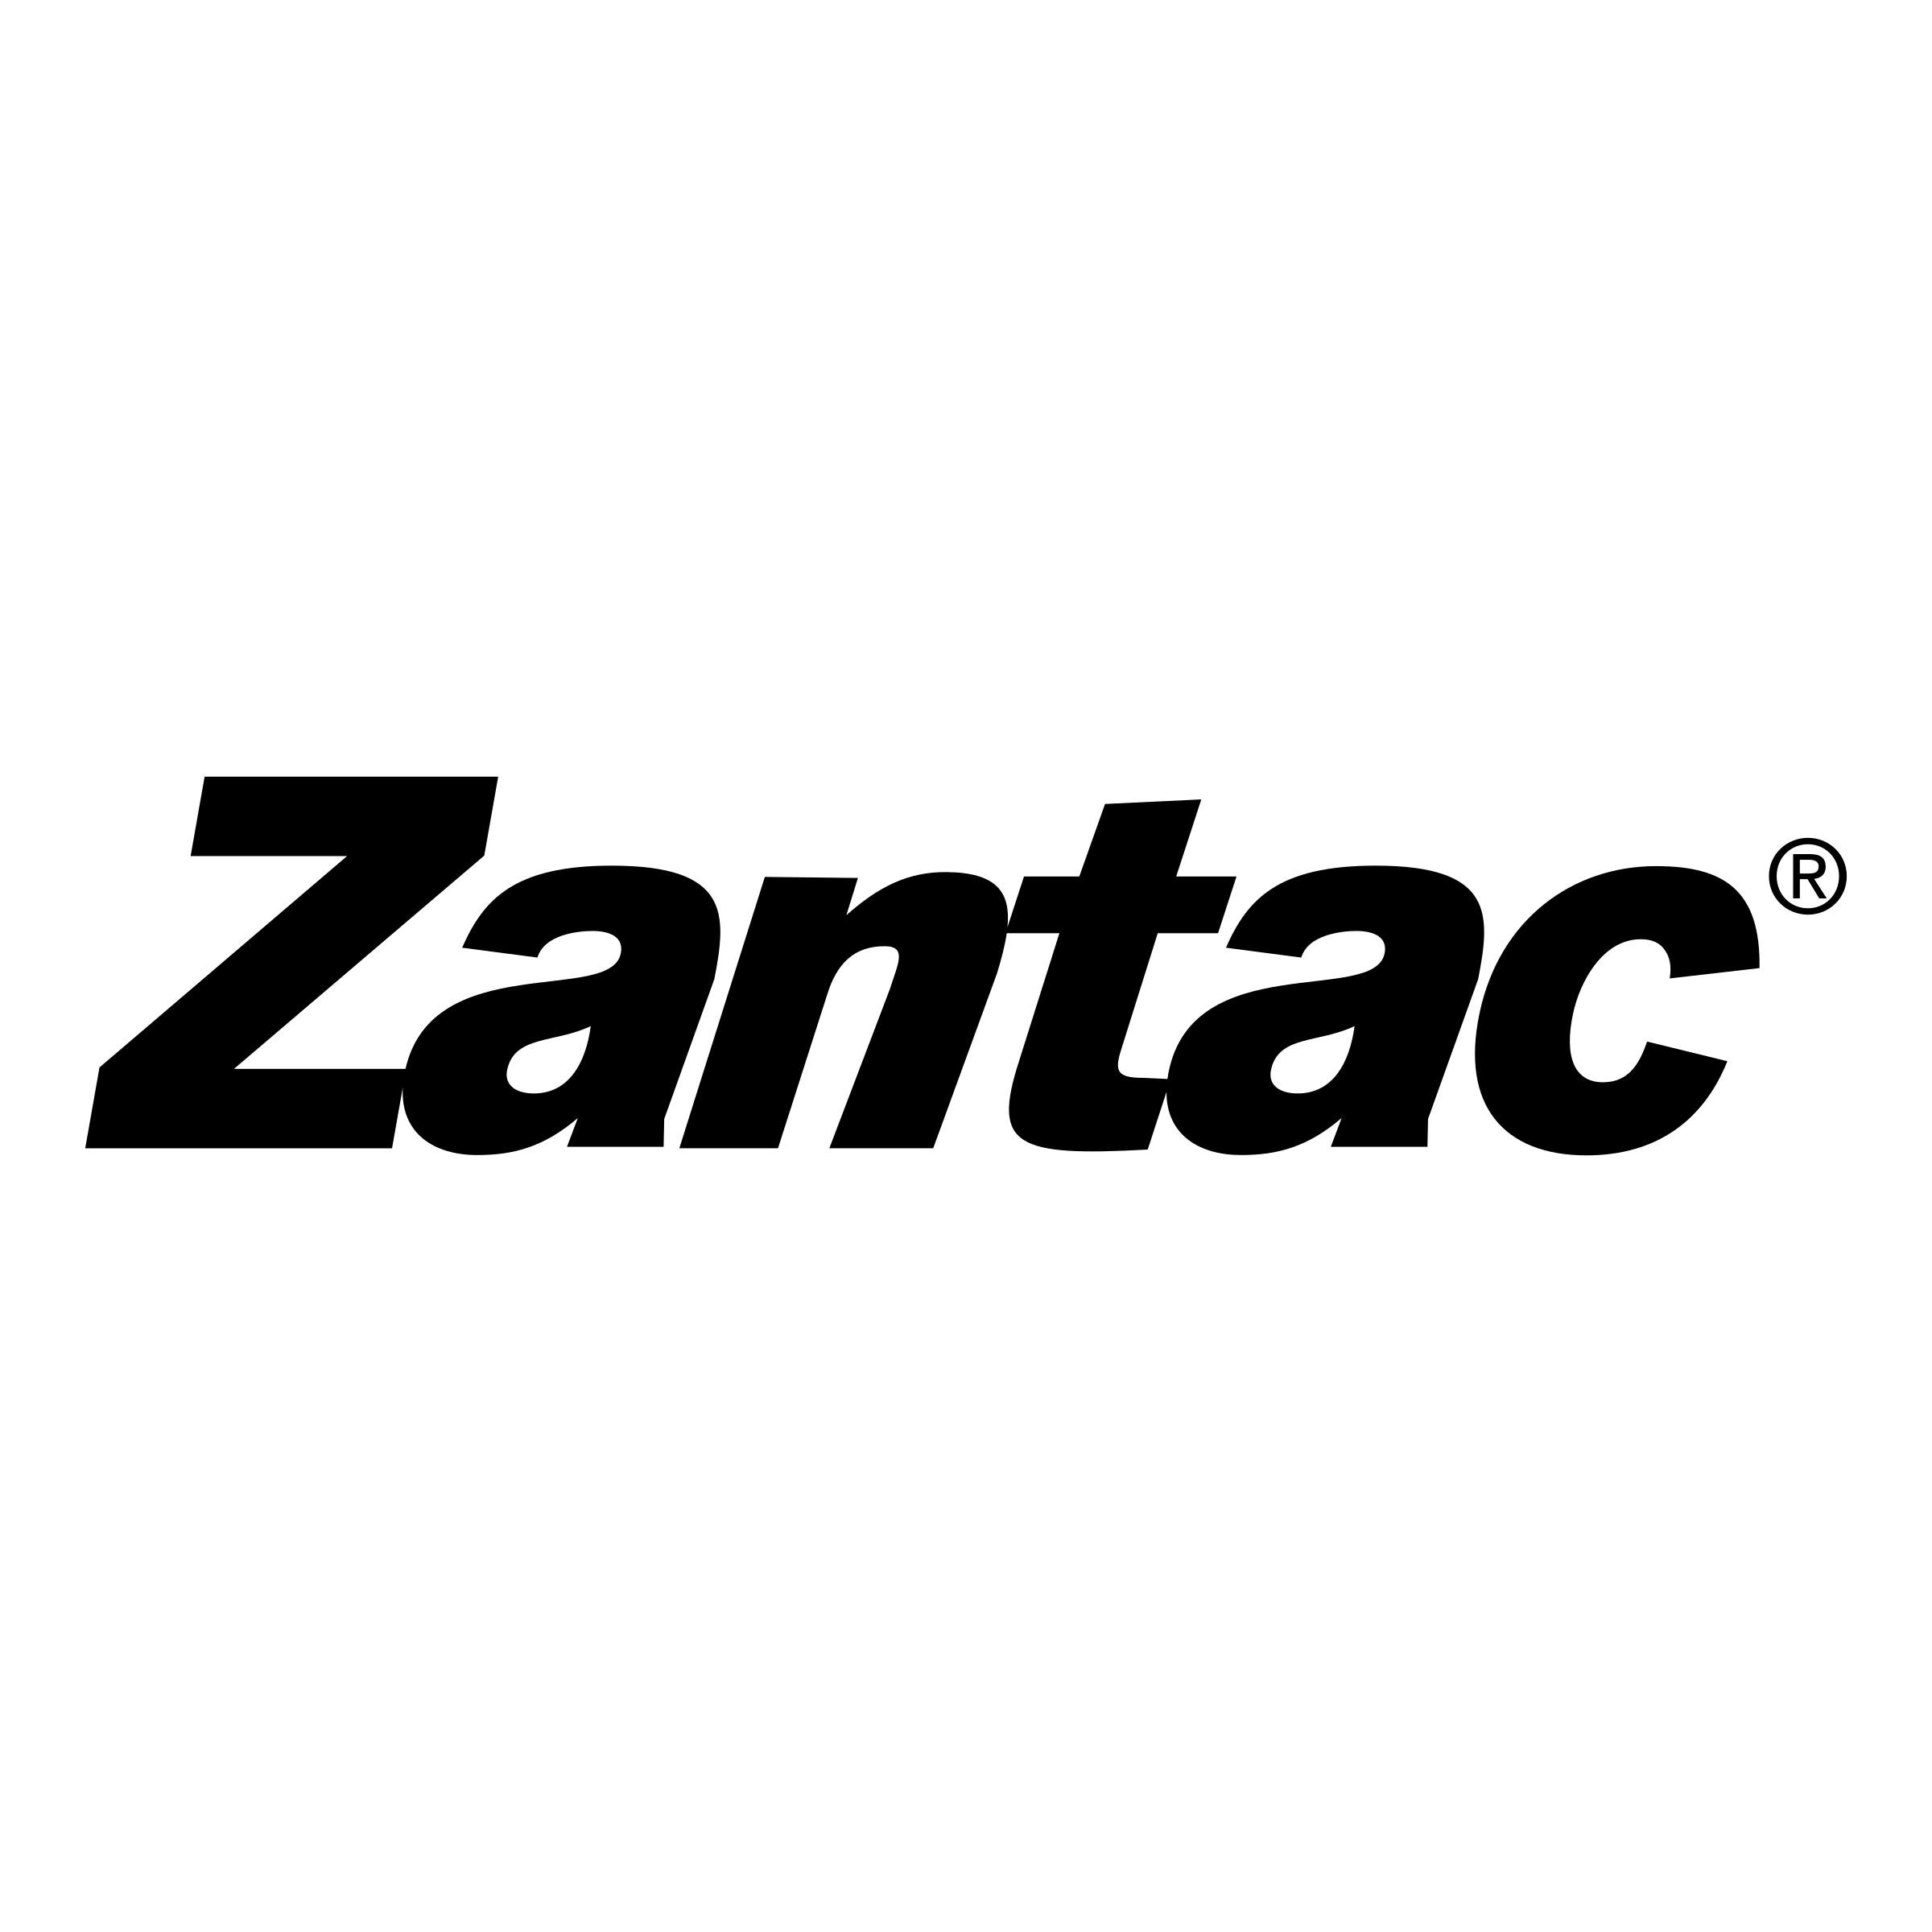 Zantac Logo - Zantac Logo PNG Transparent & SVG Vector - Freebie Supply